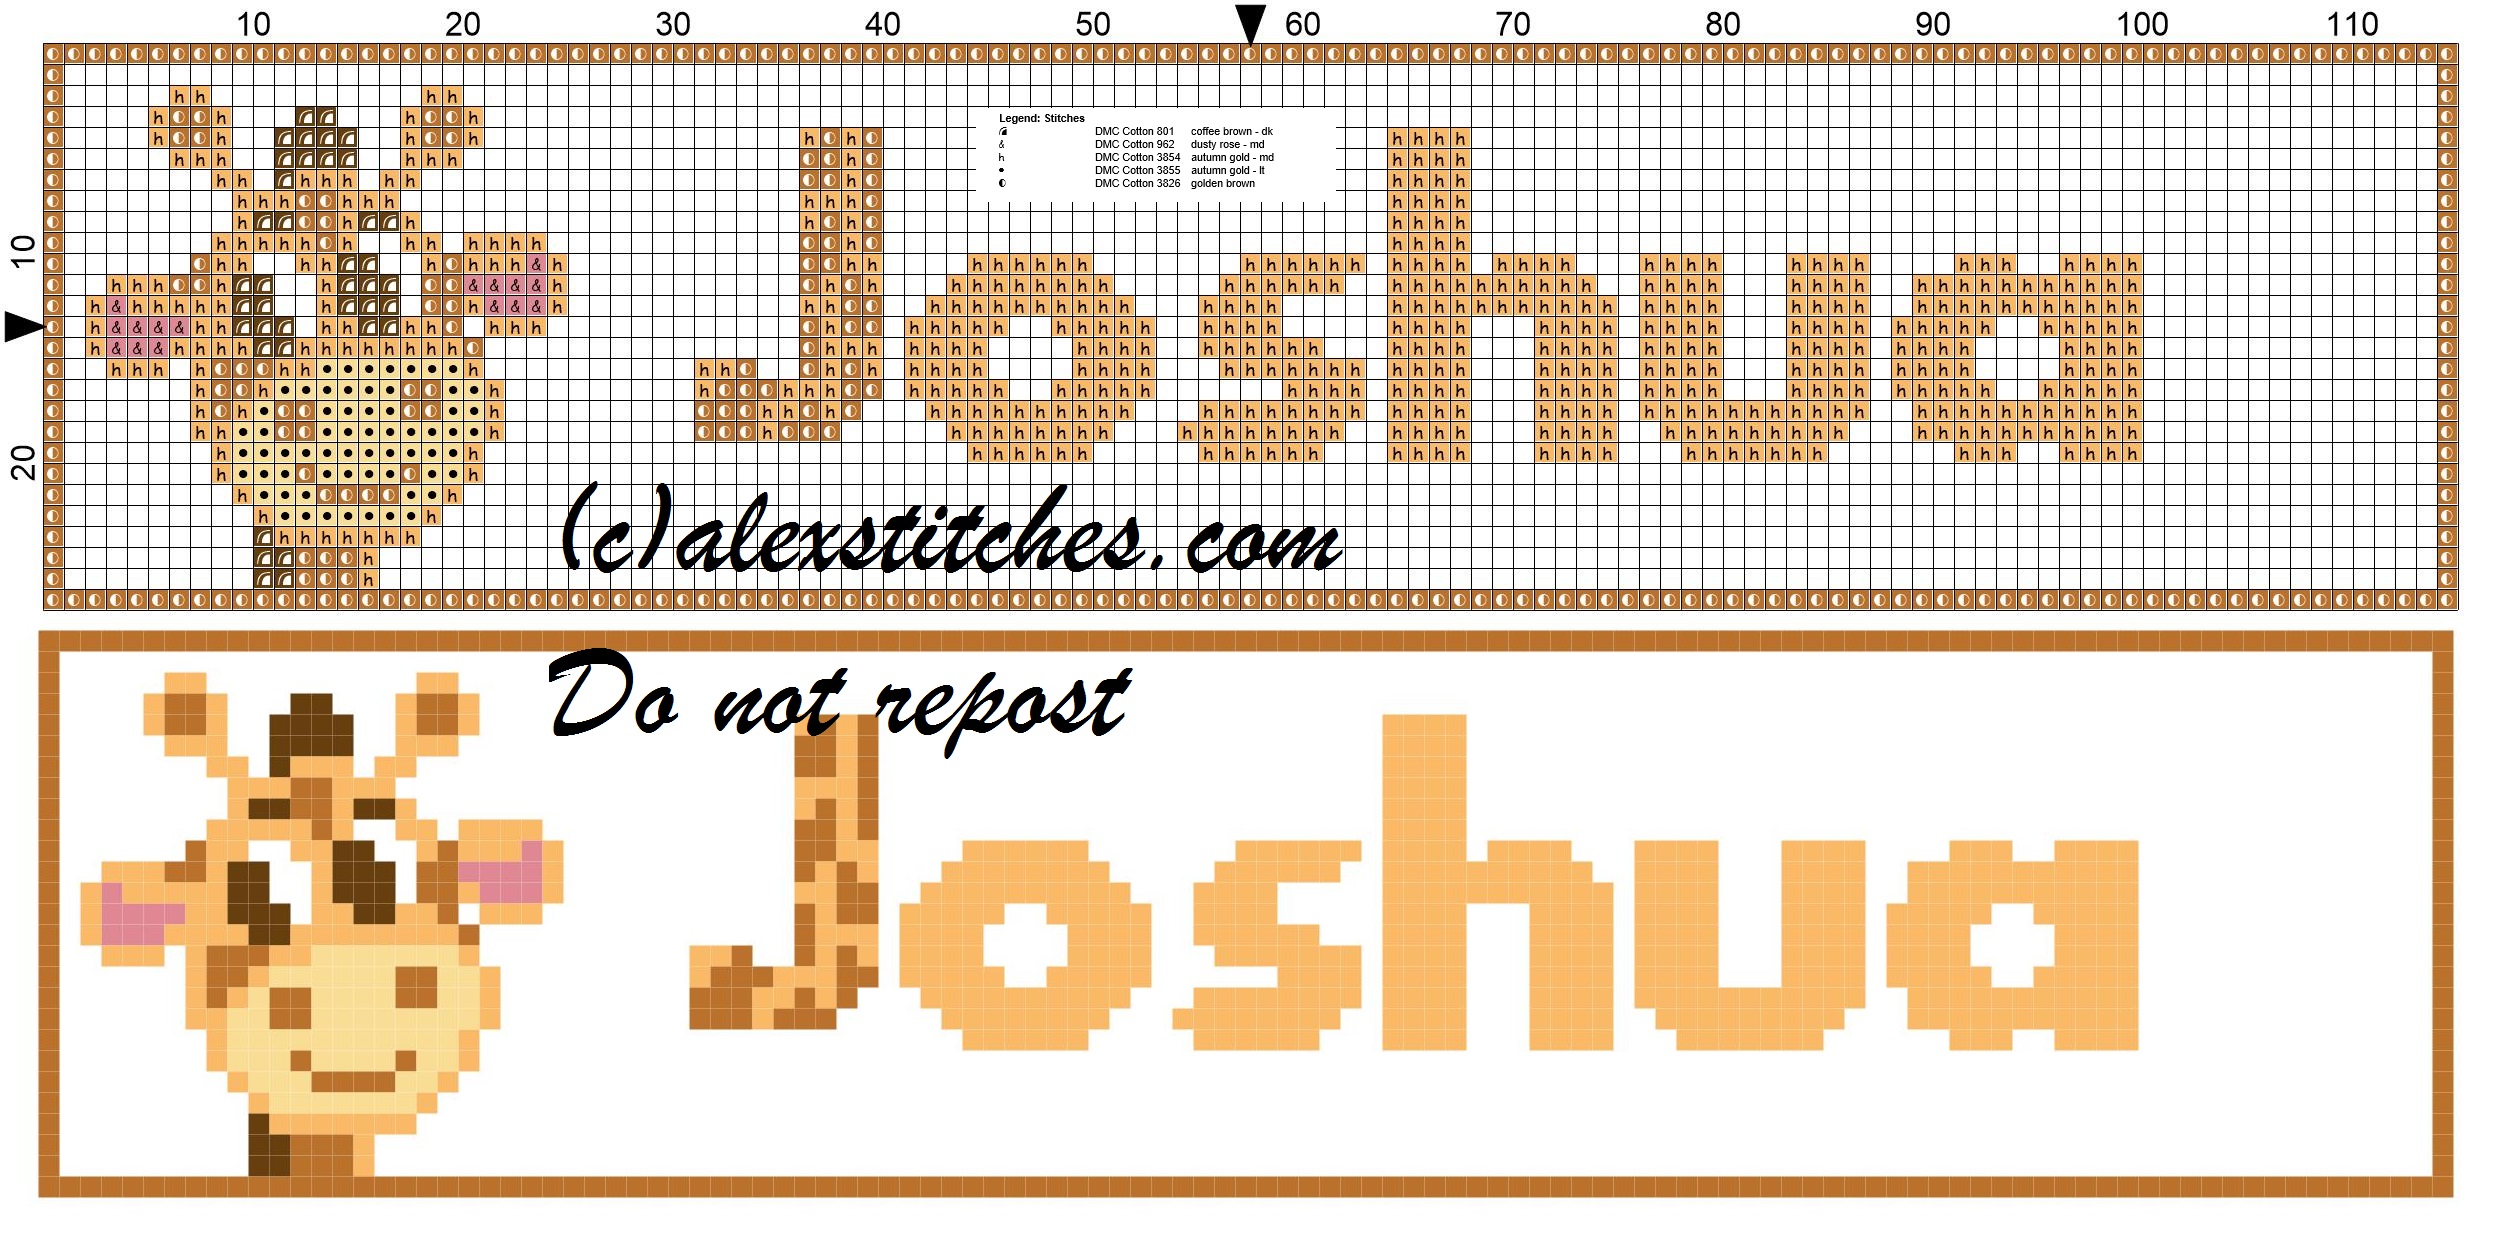 Joshua name with giraffe cross stitch pattern